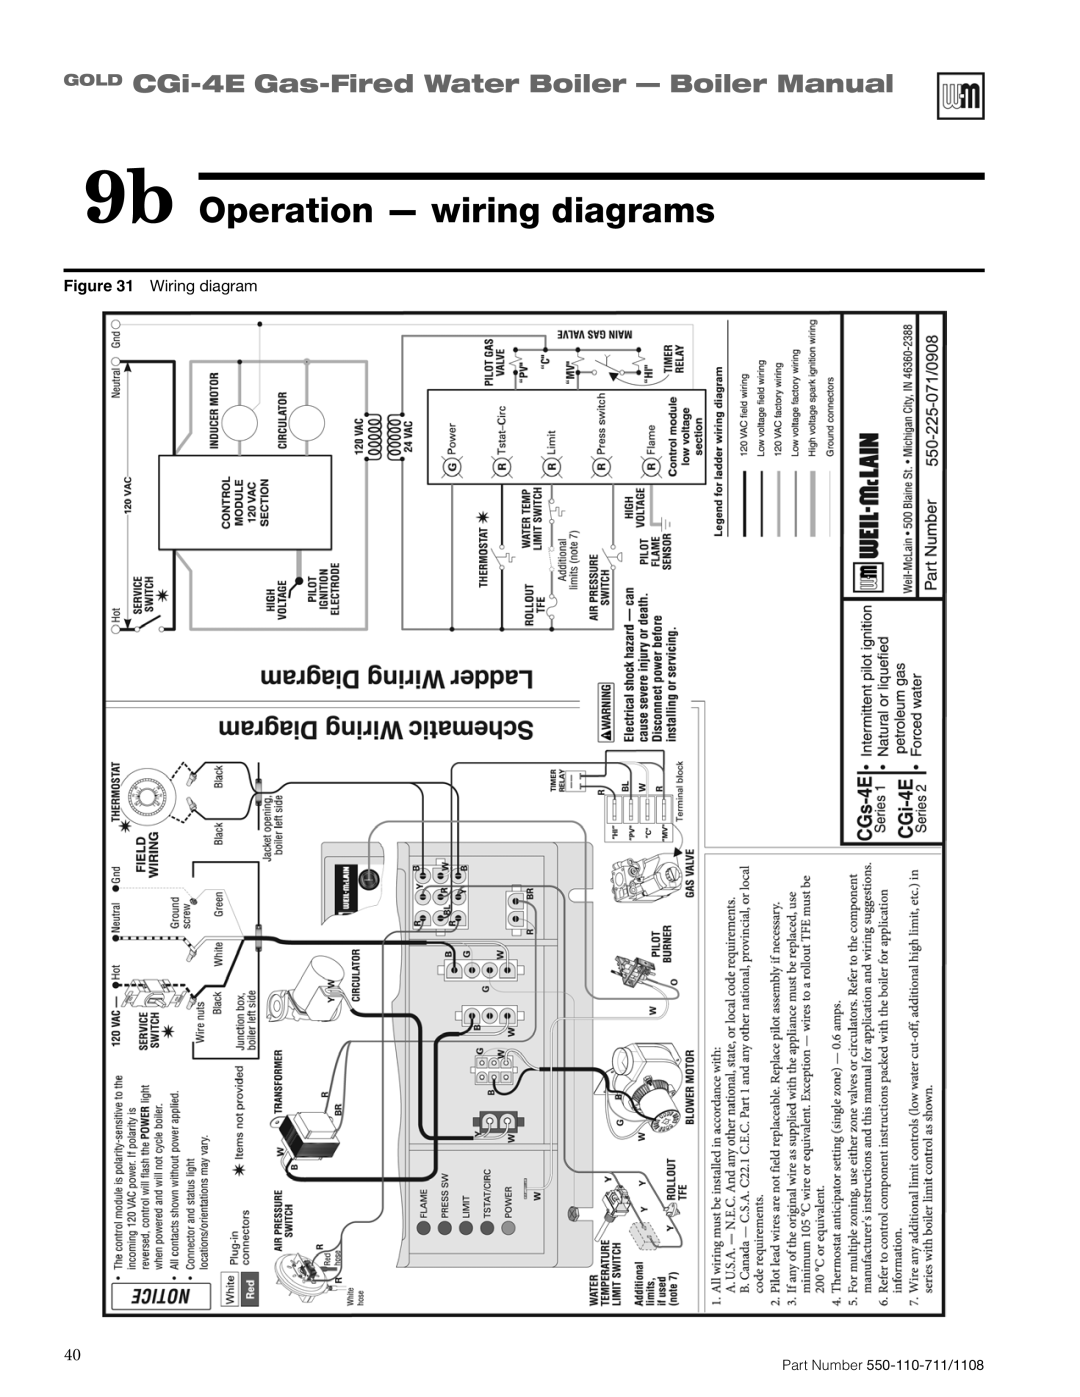 Weil-McLain CGI-4E manual 9b Operation - wiring diagrams, GOLD CGi-4E Gas-FiredWater Boiler - Boiler Manual, Wiring diagram 